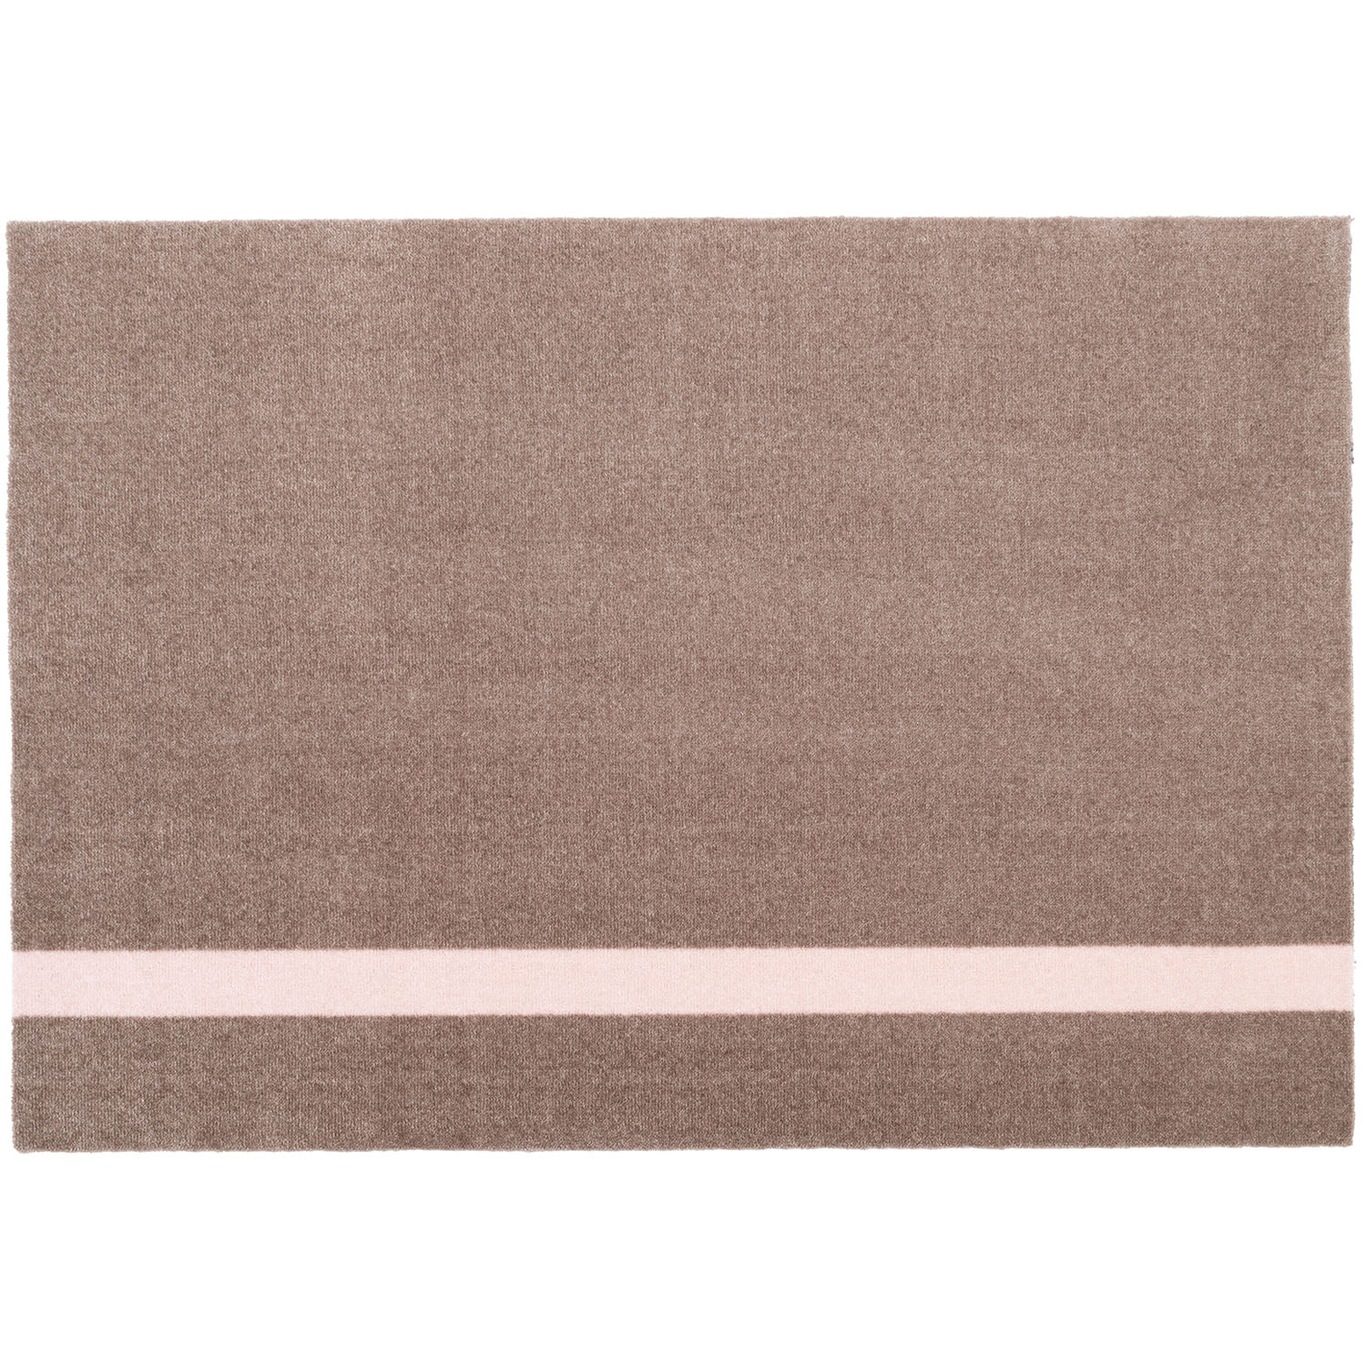 Stripes Teppich Vertikal Sandfarben/Light Rose, 90x130 cm